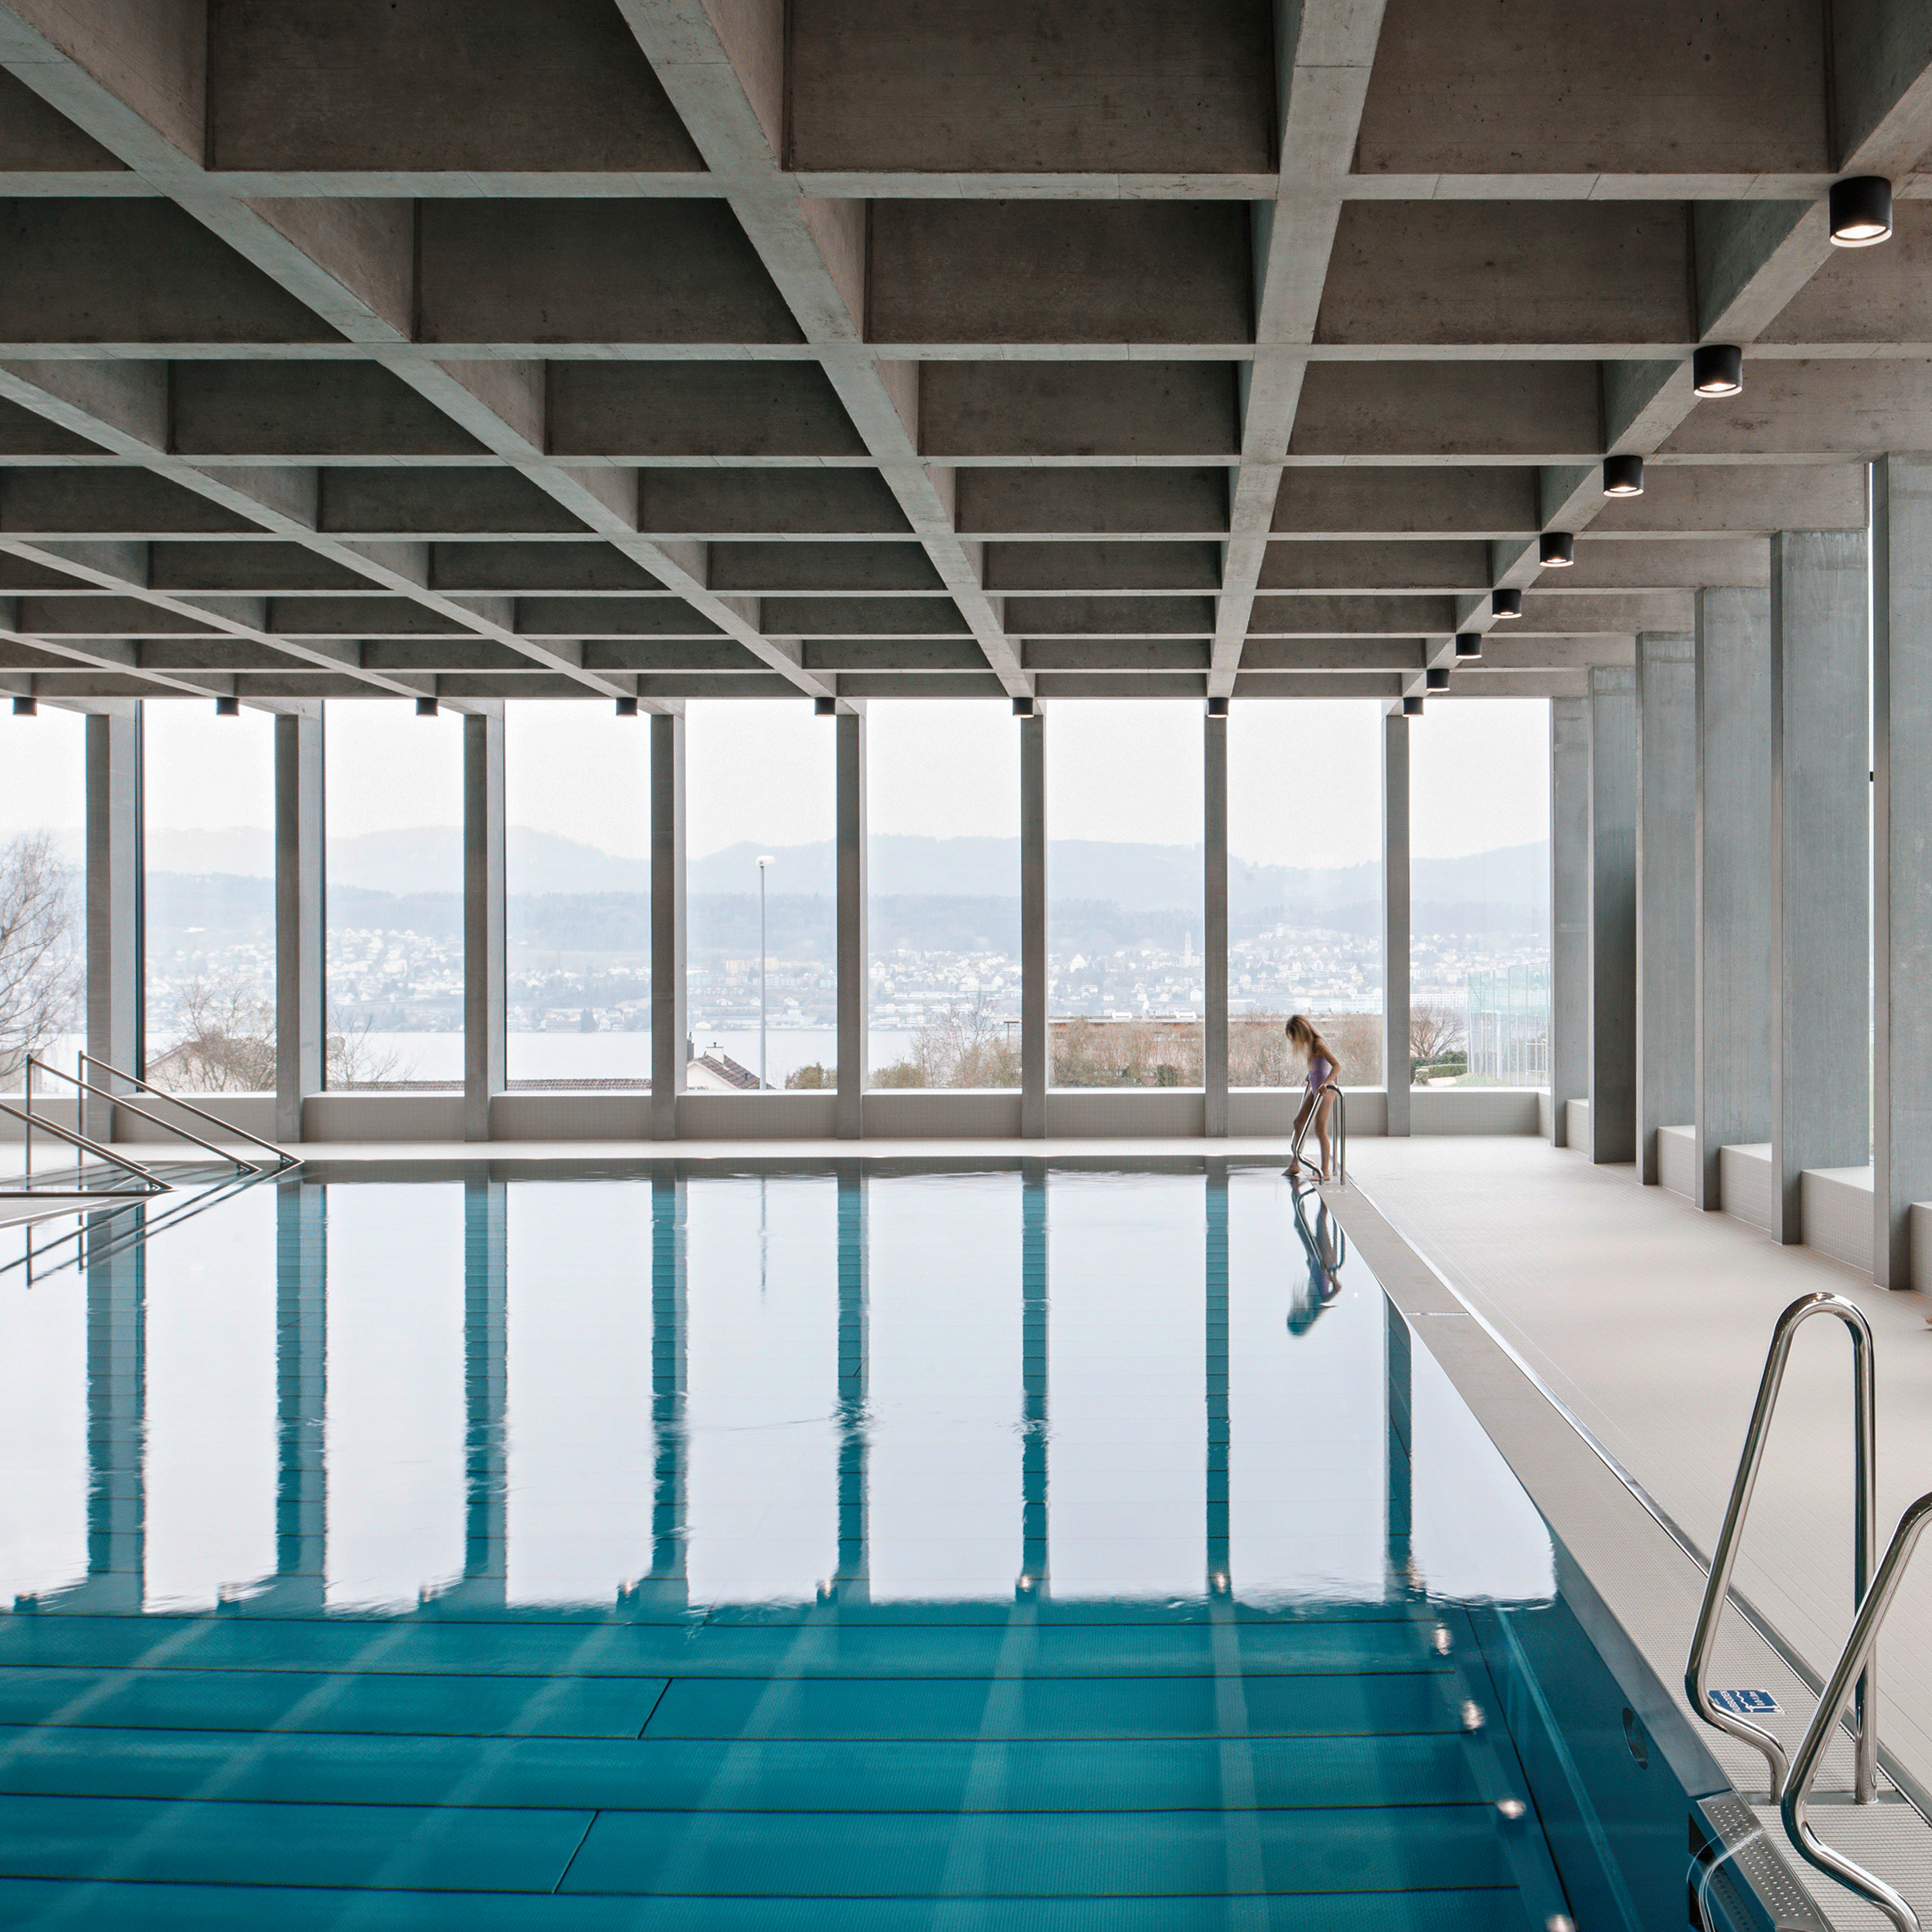 architect zaha hadid designed the aquatic center for the london medium